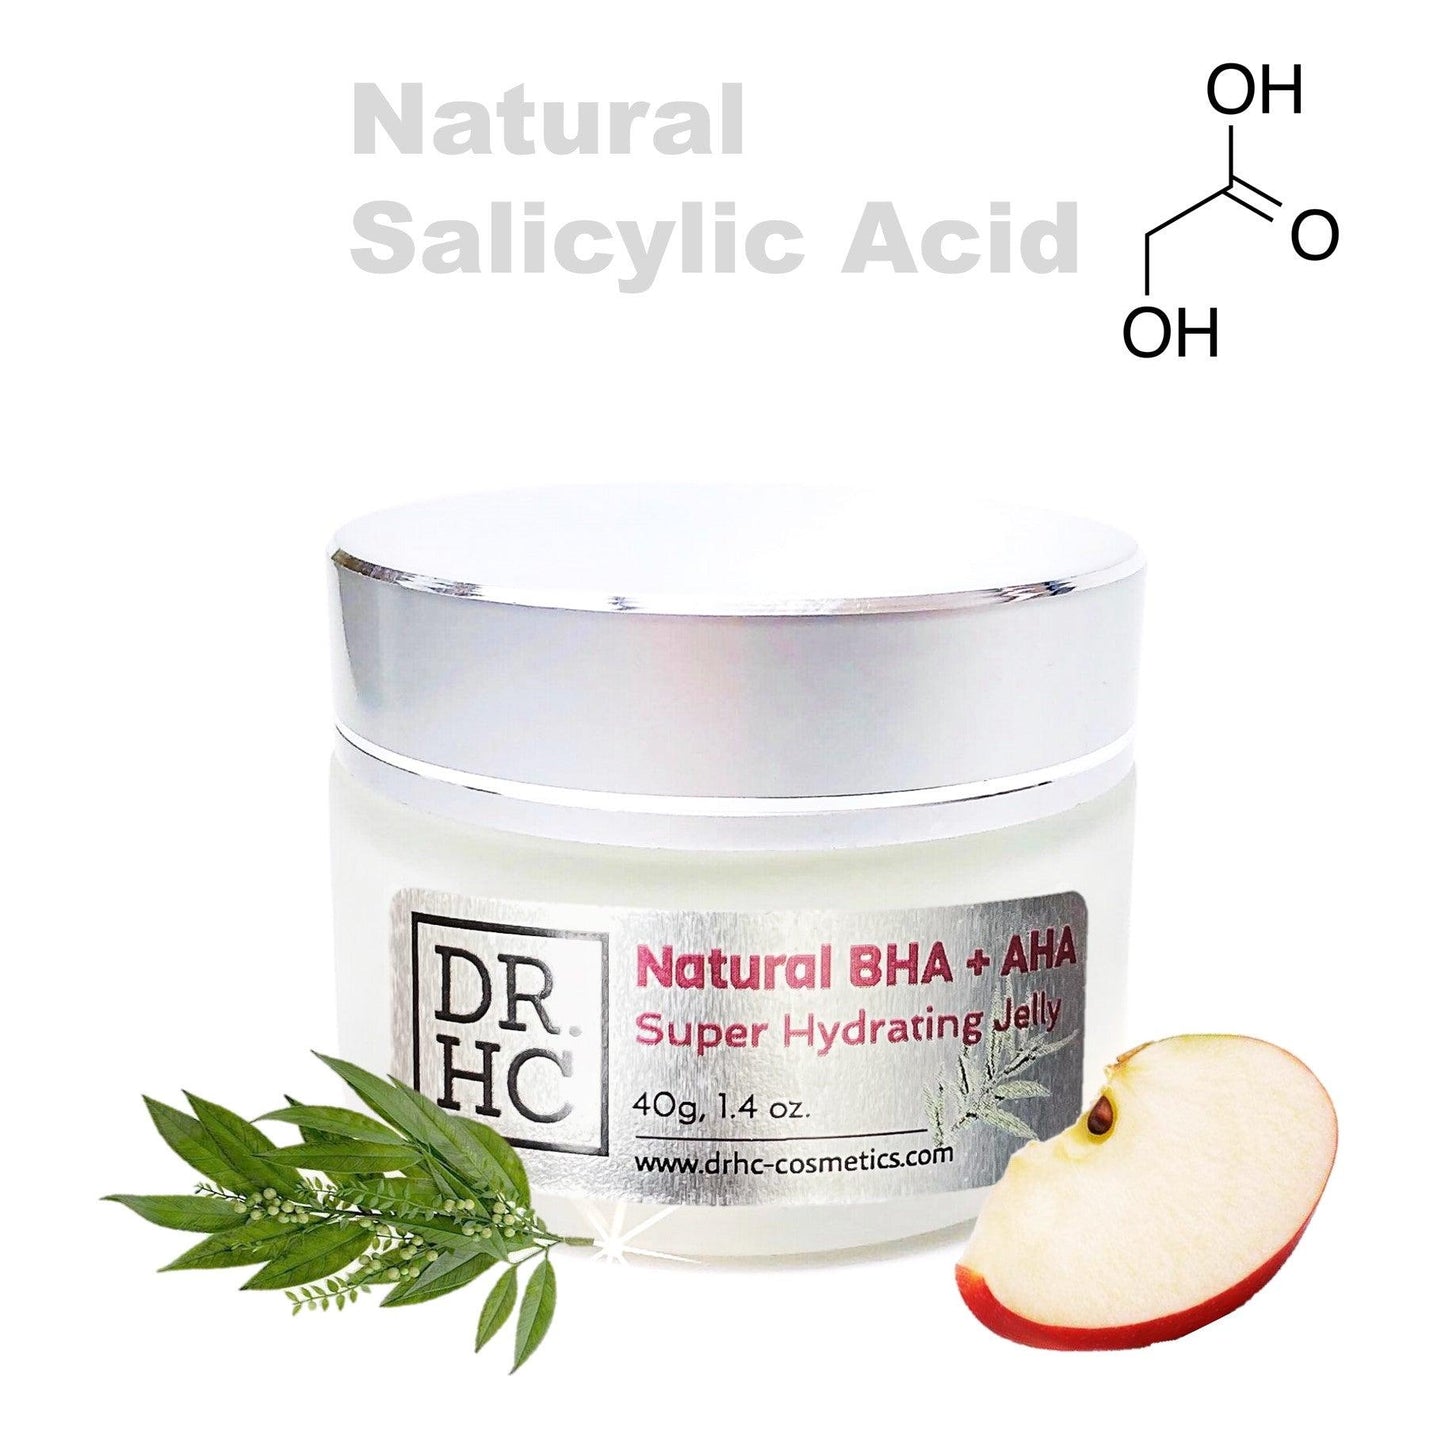 DR.HC Natural BHA + AHA Super Hydrating Jelly (25~40g, 0.9~1.4oz) (Skin brightening, Anti-acne, Anti-blemish, Oil balancing, Anti-aging...)